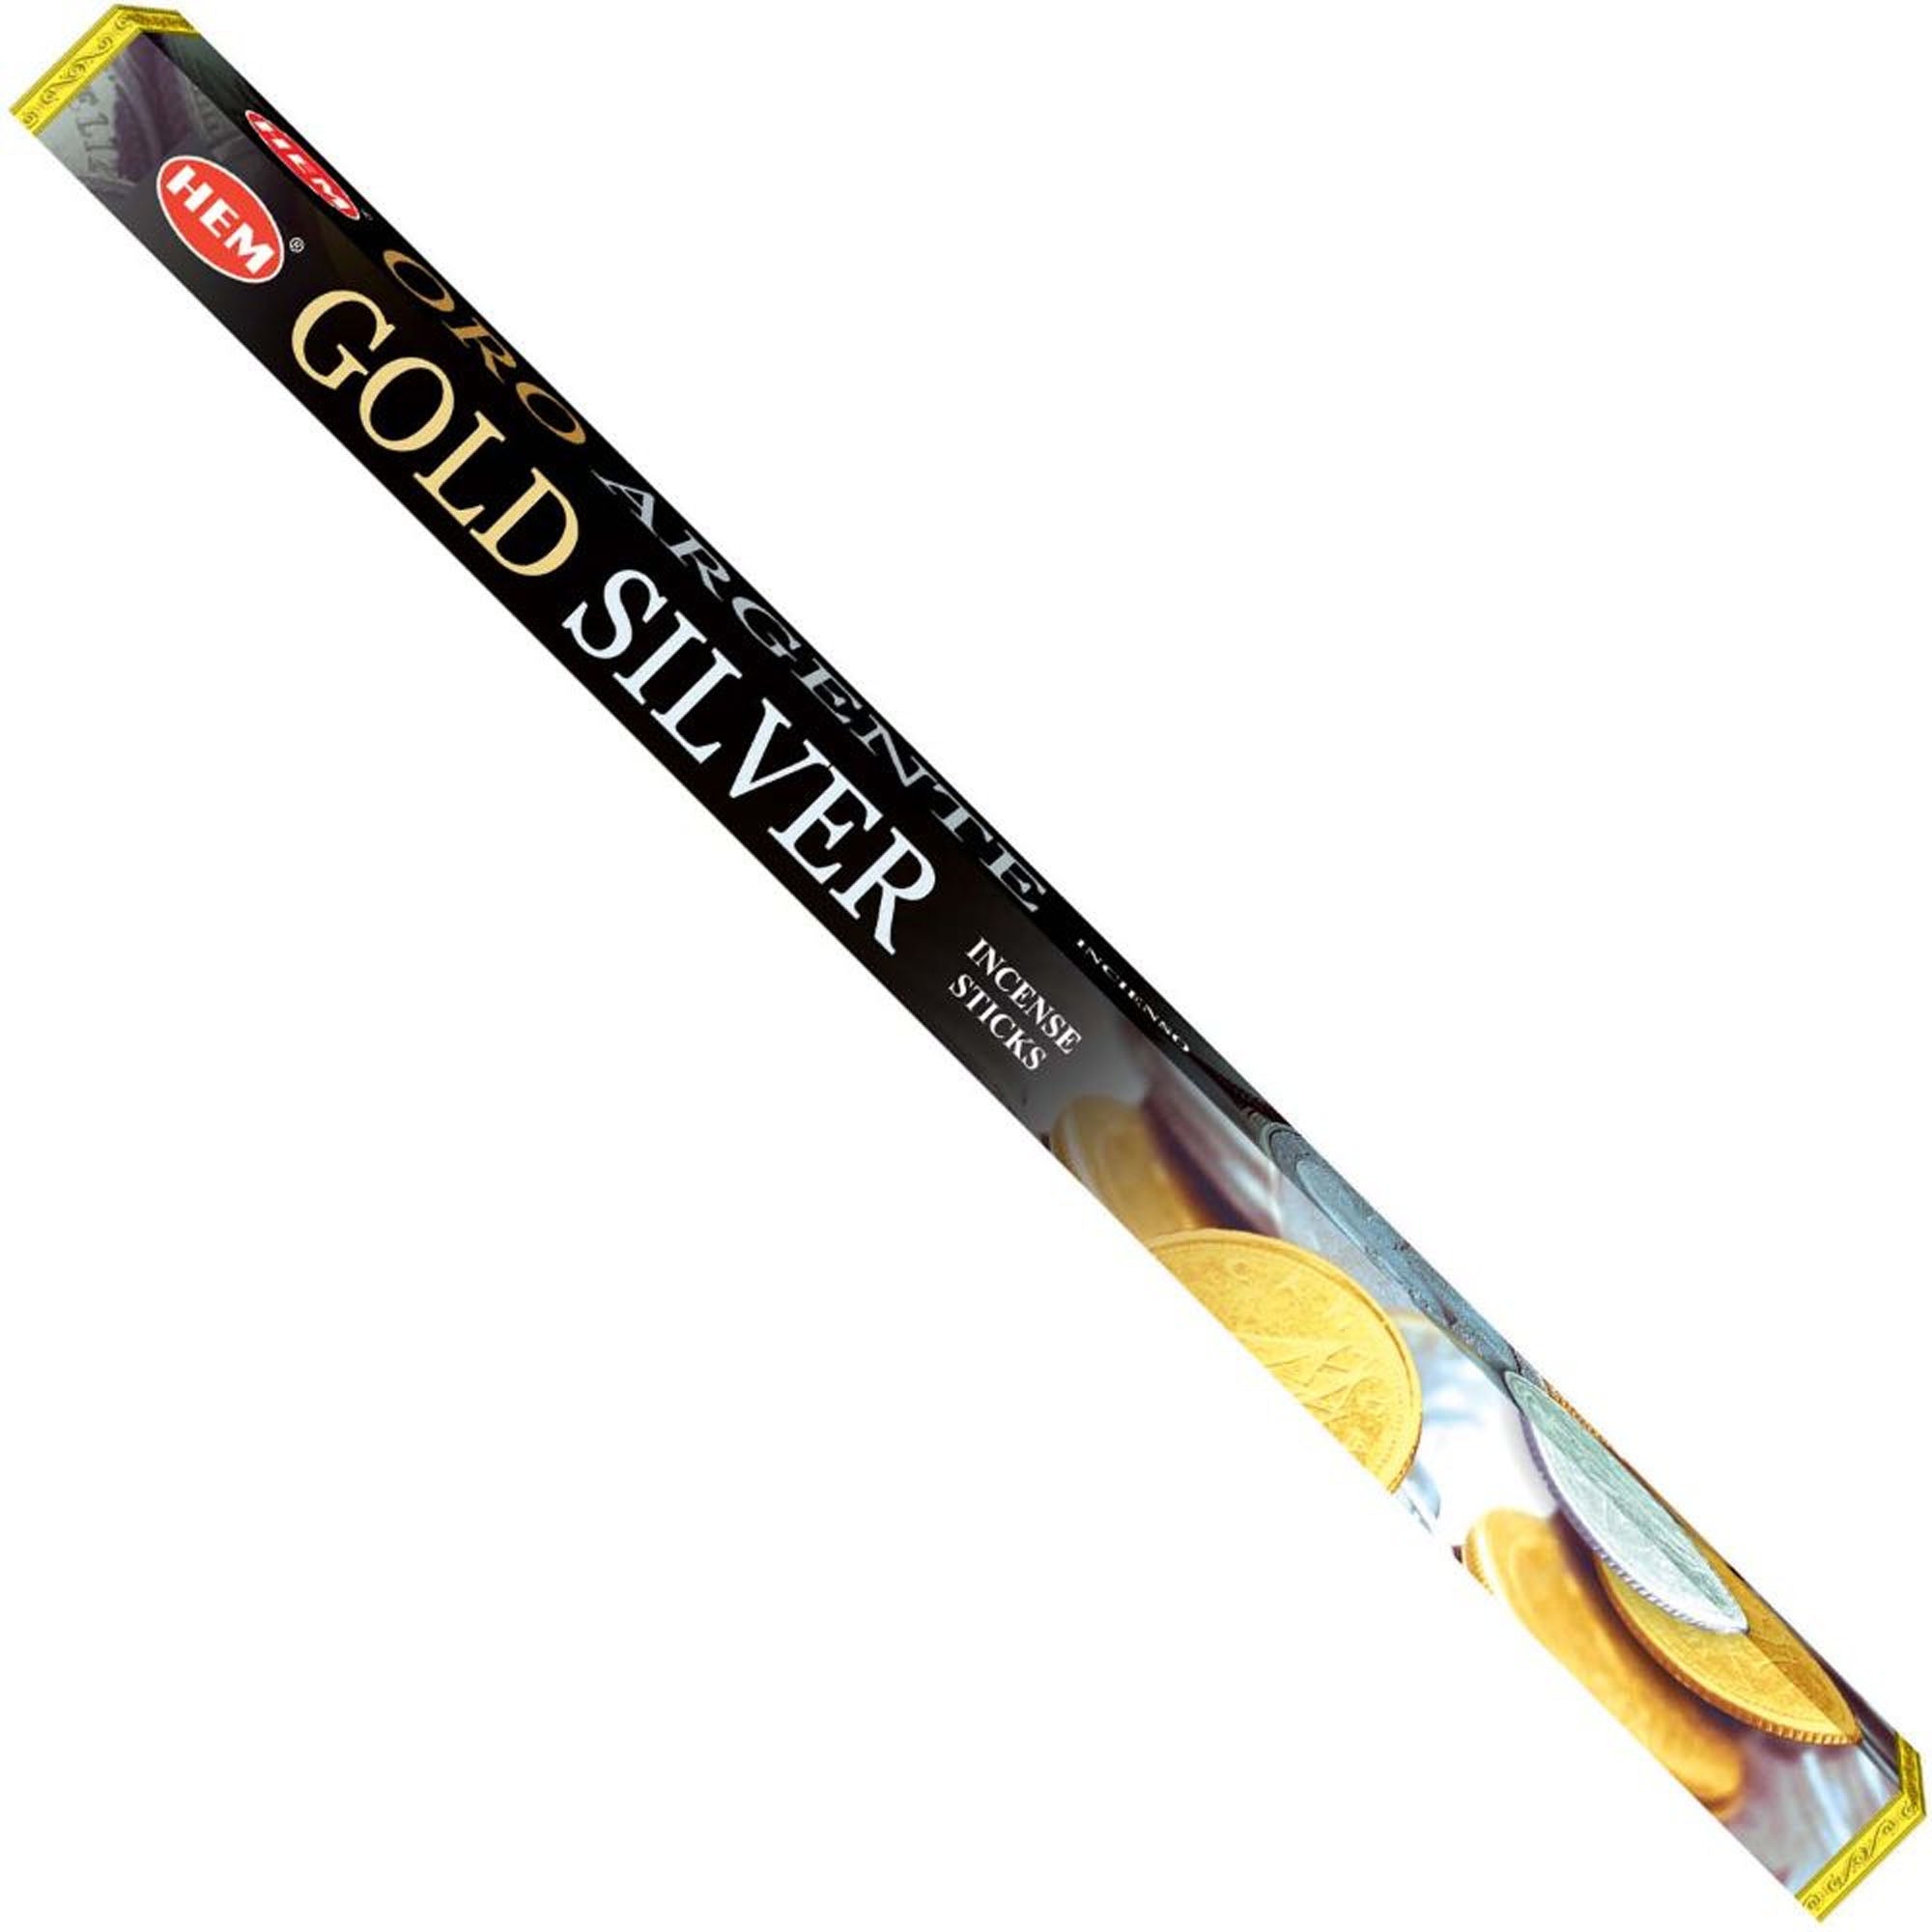 Hem - Square - Gold Silver Incense Sticks